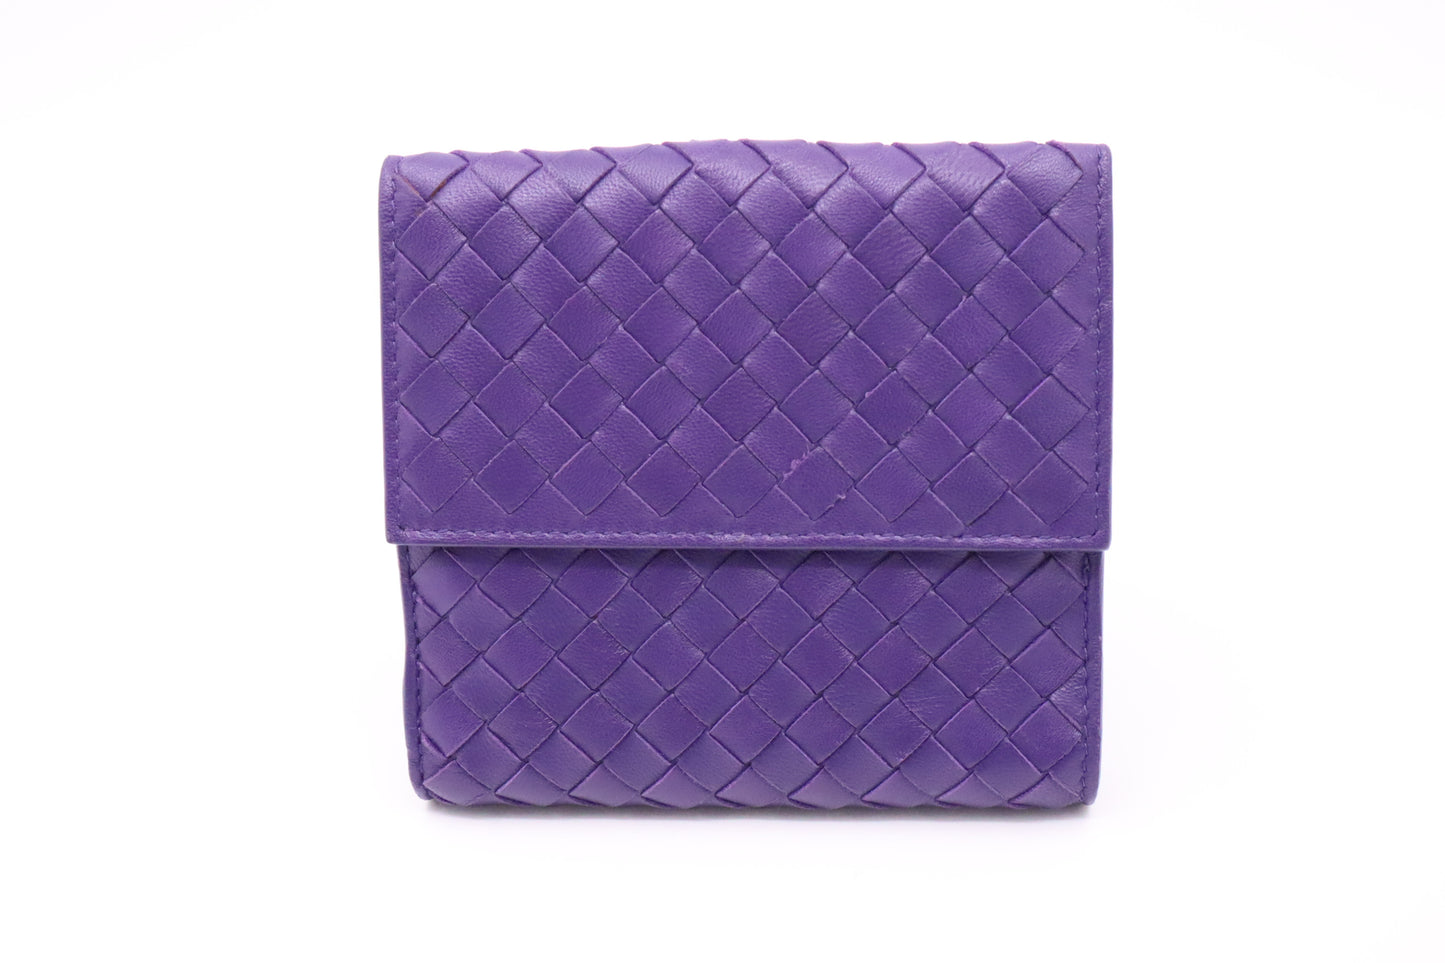 Bottega Veneta Compact Wallet in Purple Intrecciato Leather